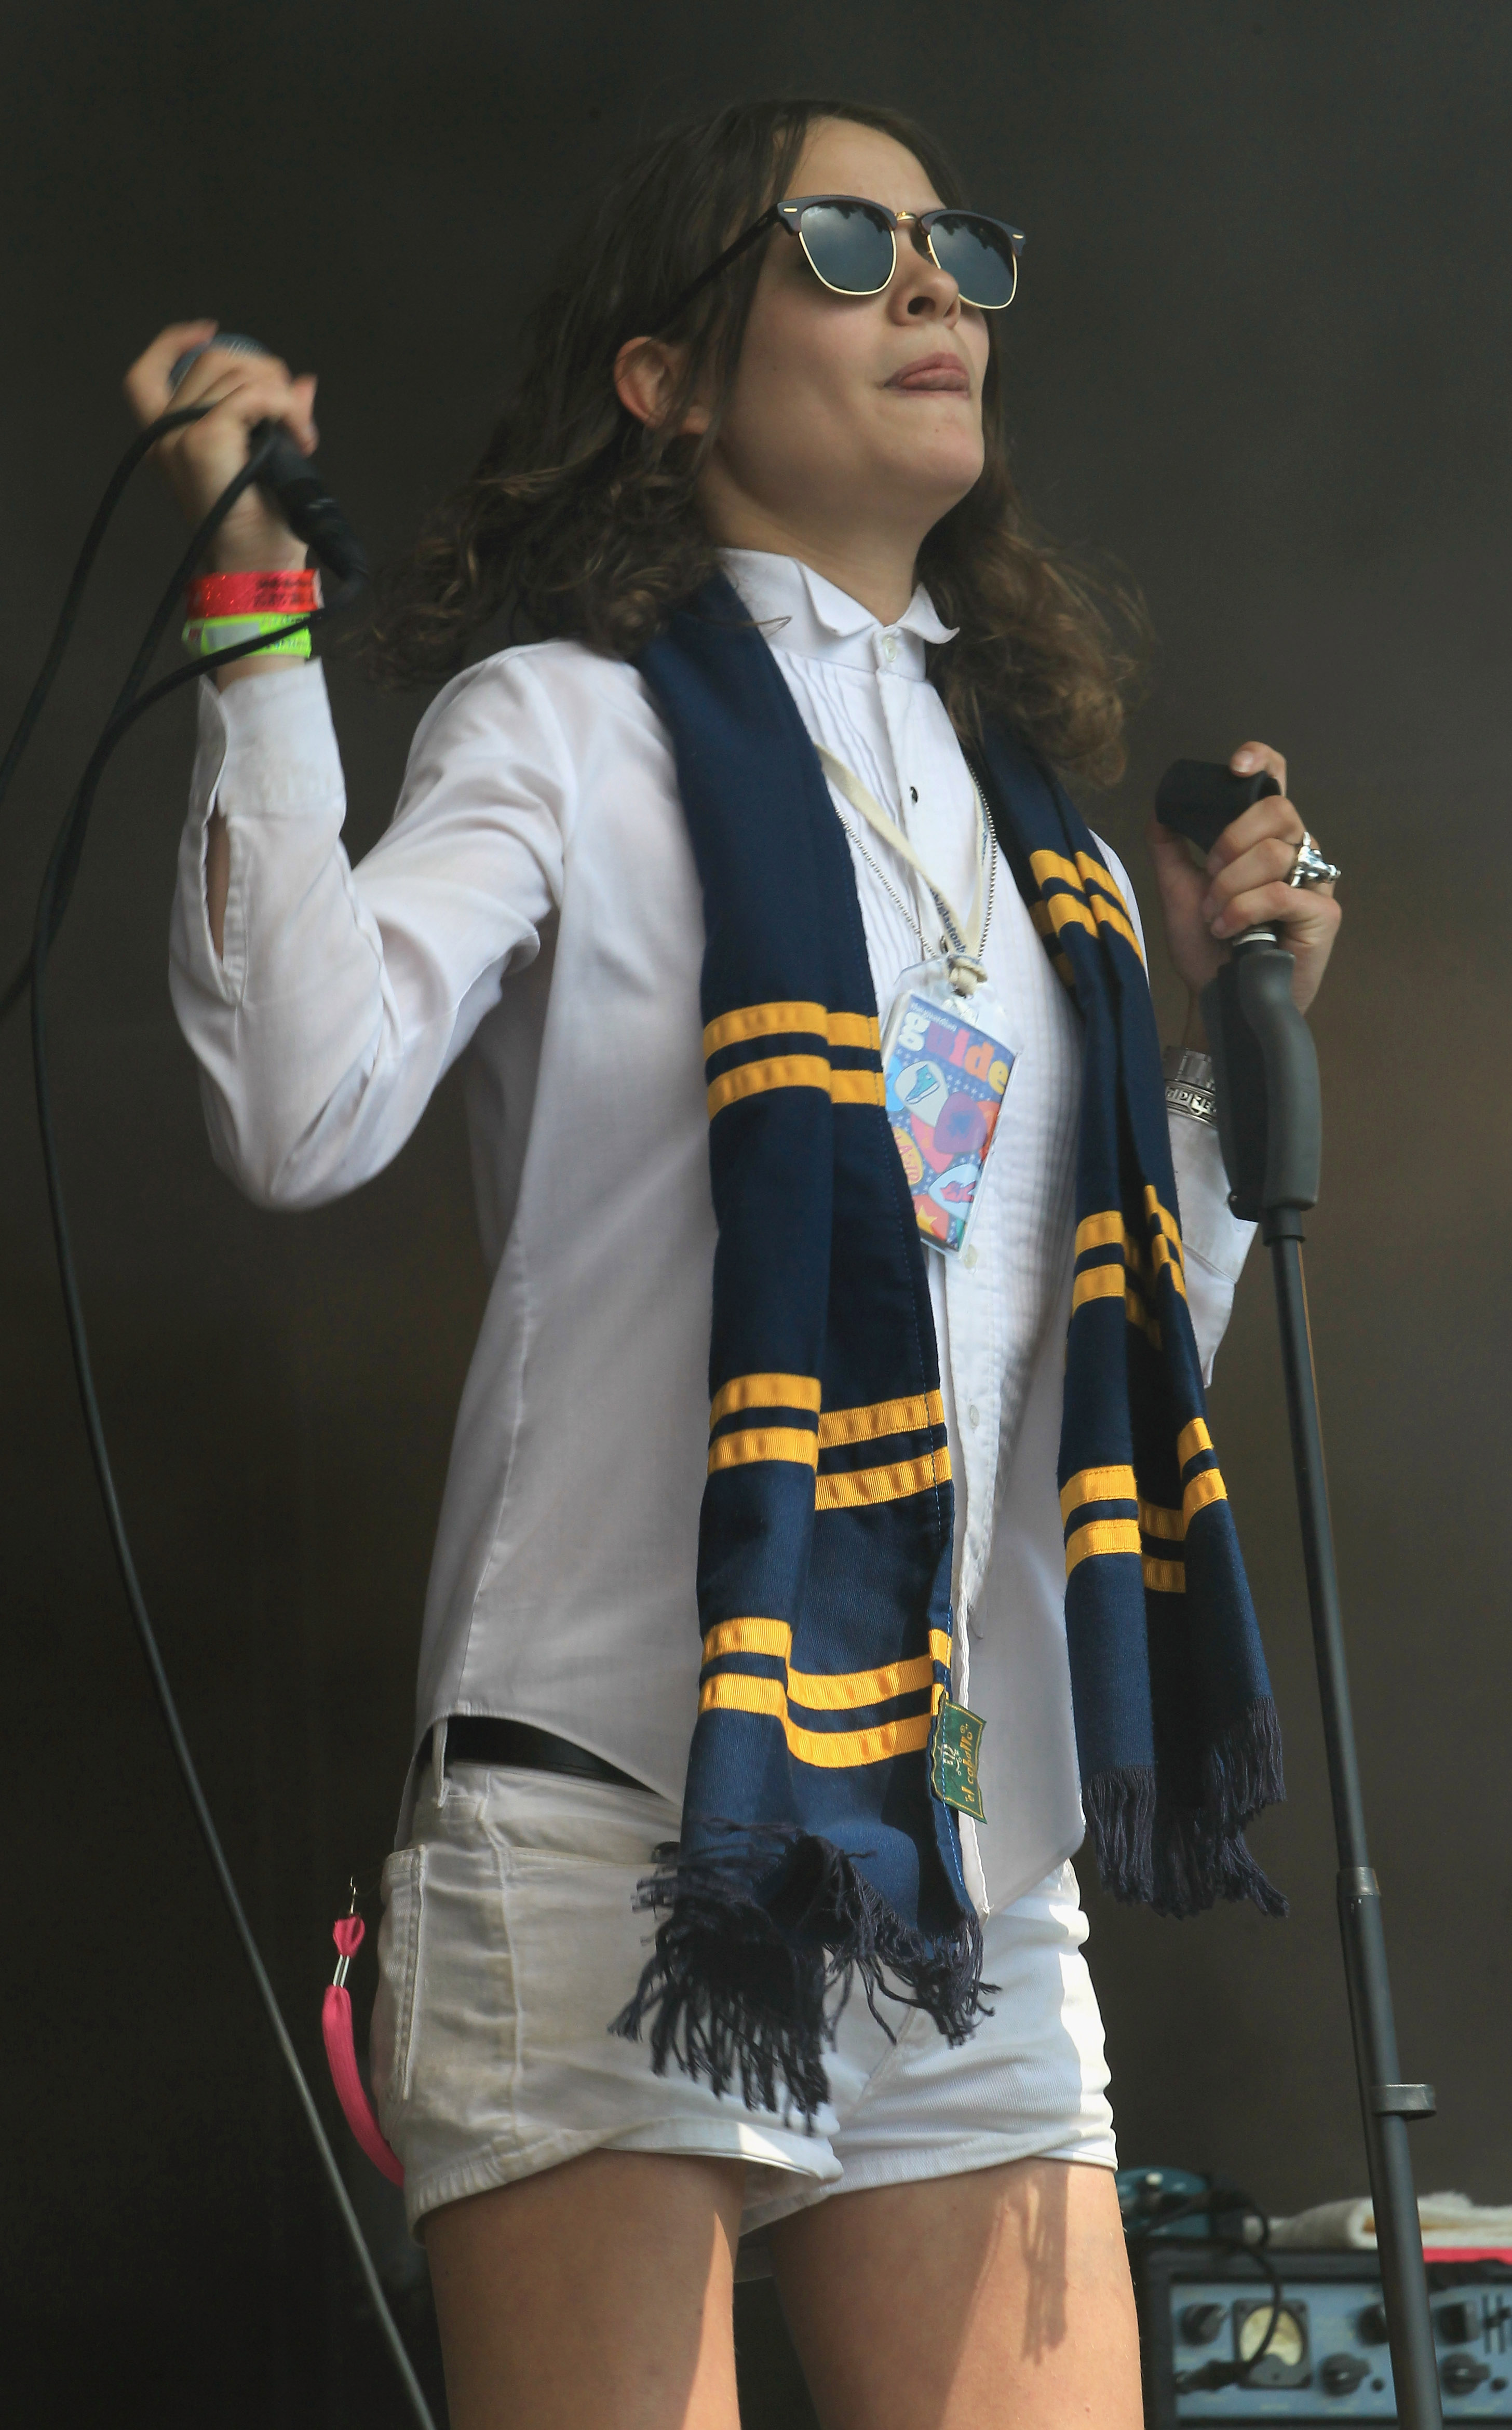 Eliot Sumner performs at Glastonbury Festival on June 26, 2010 in Glastonbury, England | Source: Getty Images